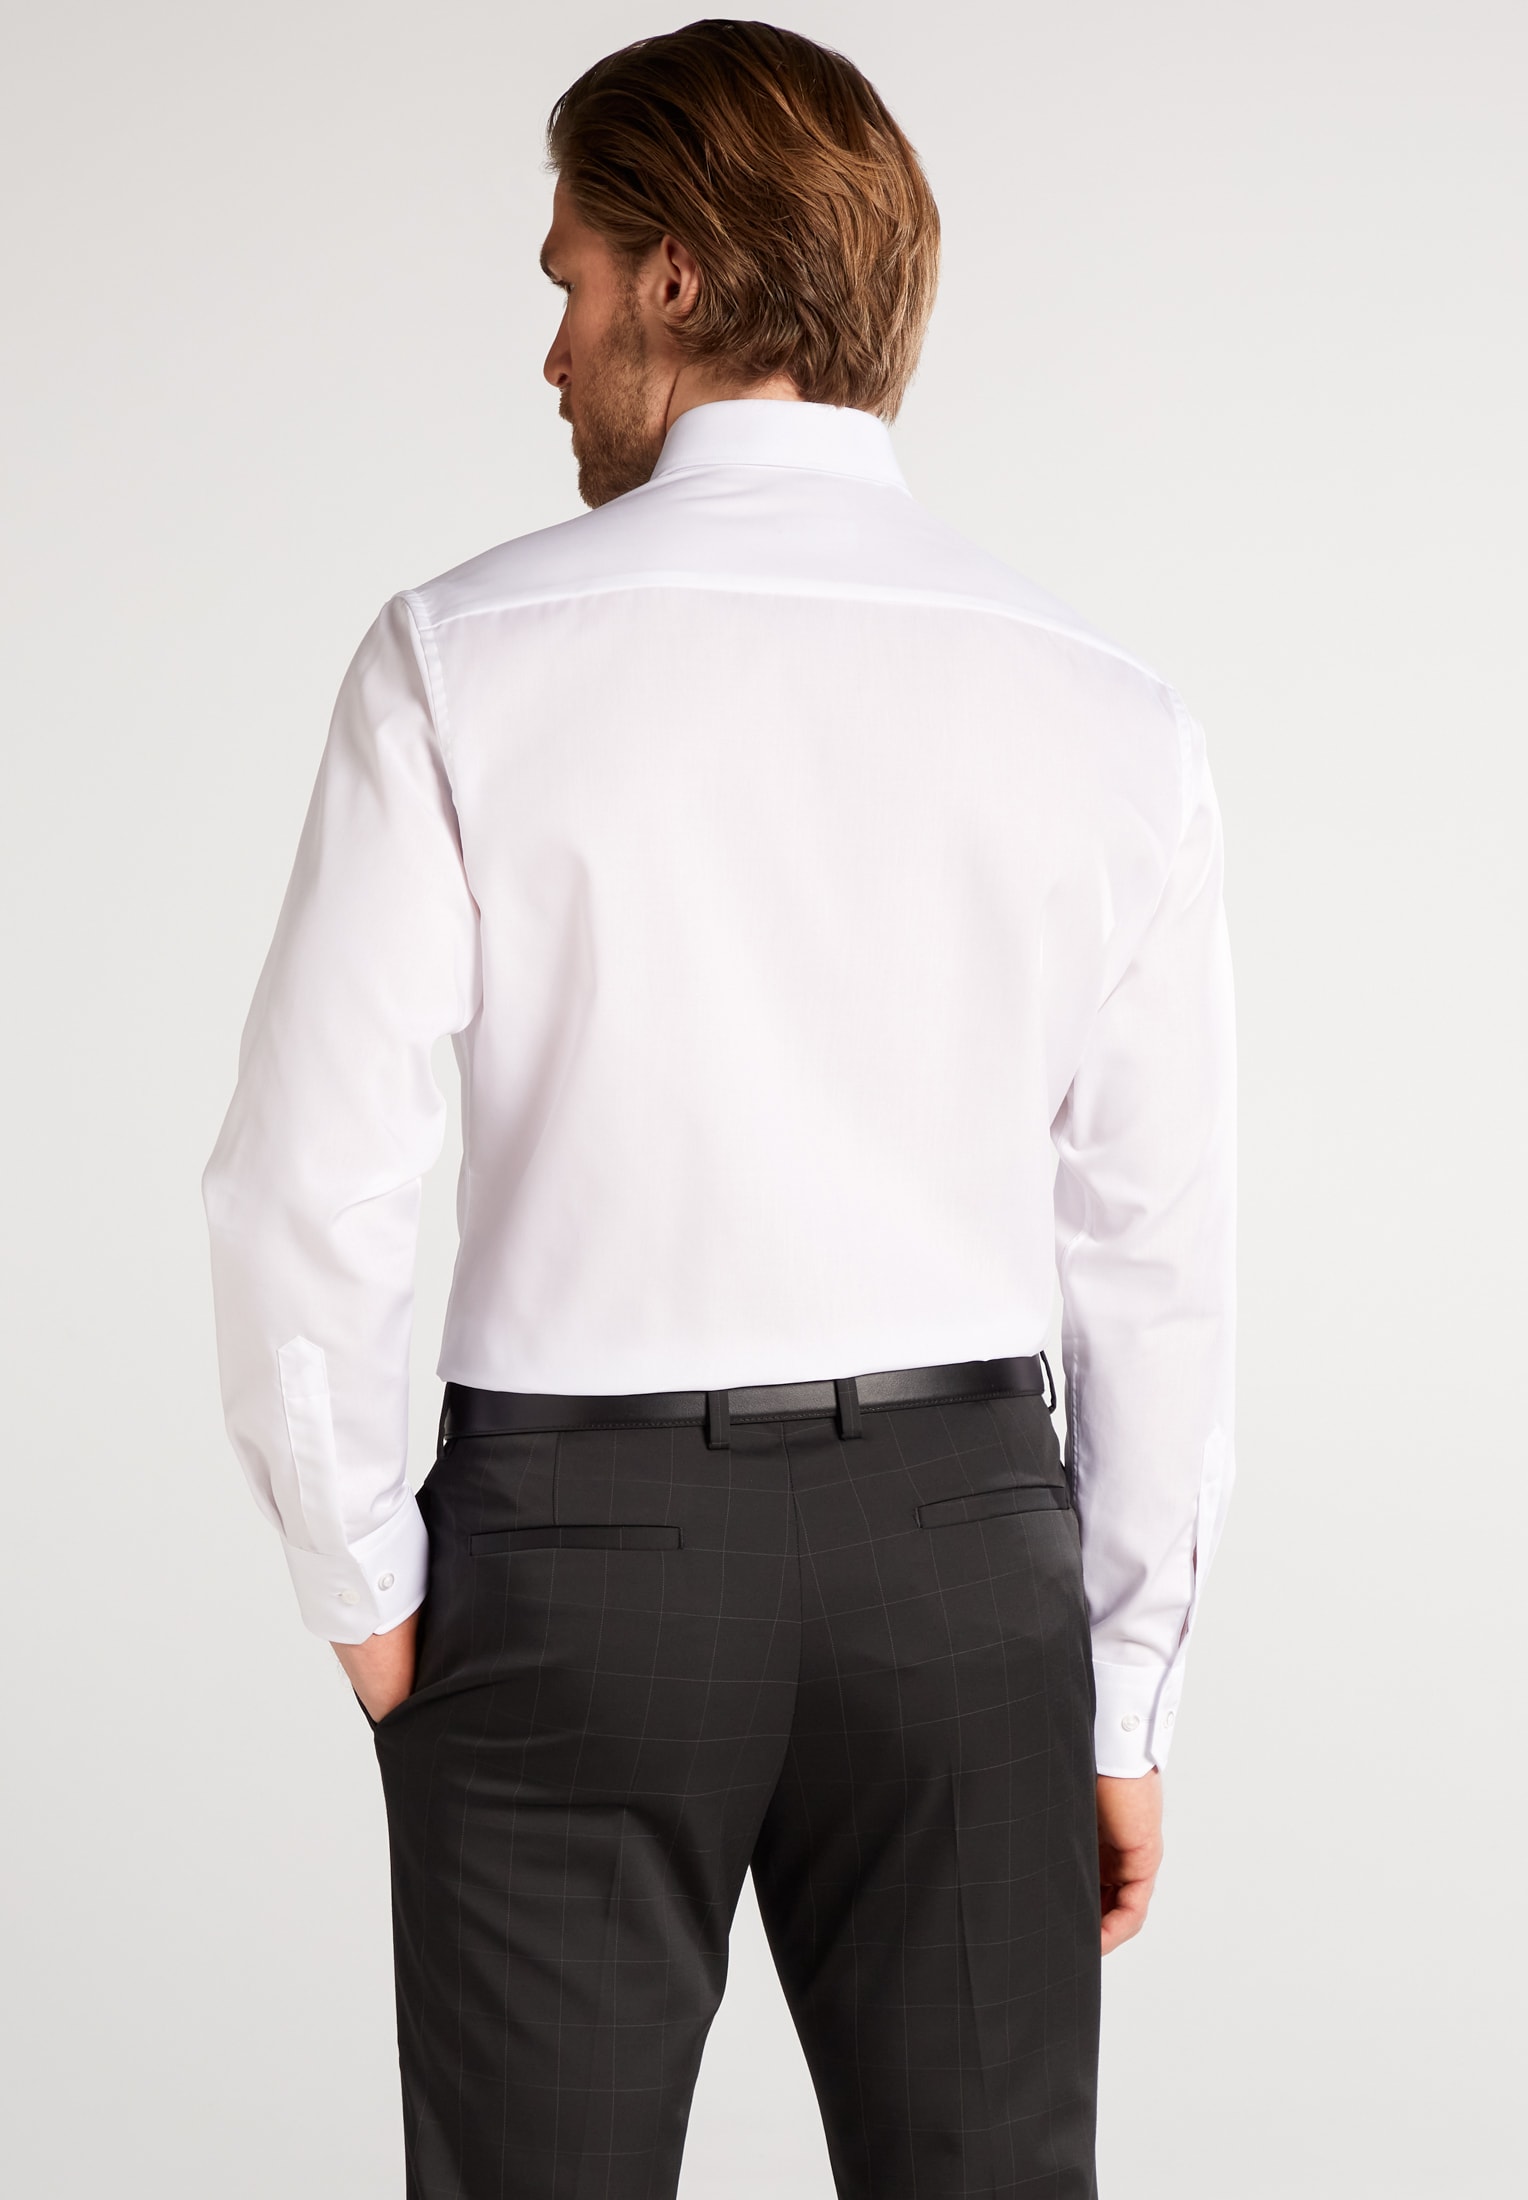 MODERN FIT Original Shirt in weiß unifarben | | | weiß 44 1SH00113-00-01-44-1/1 Langarm 